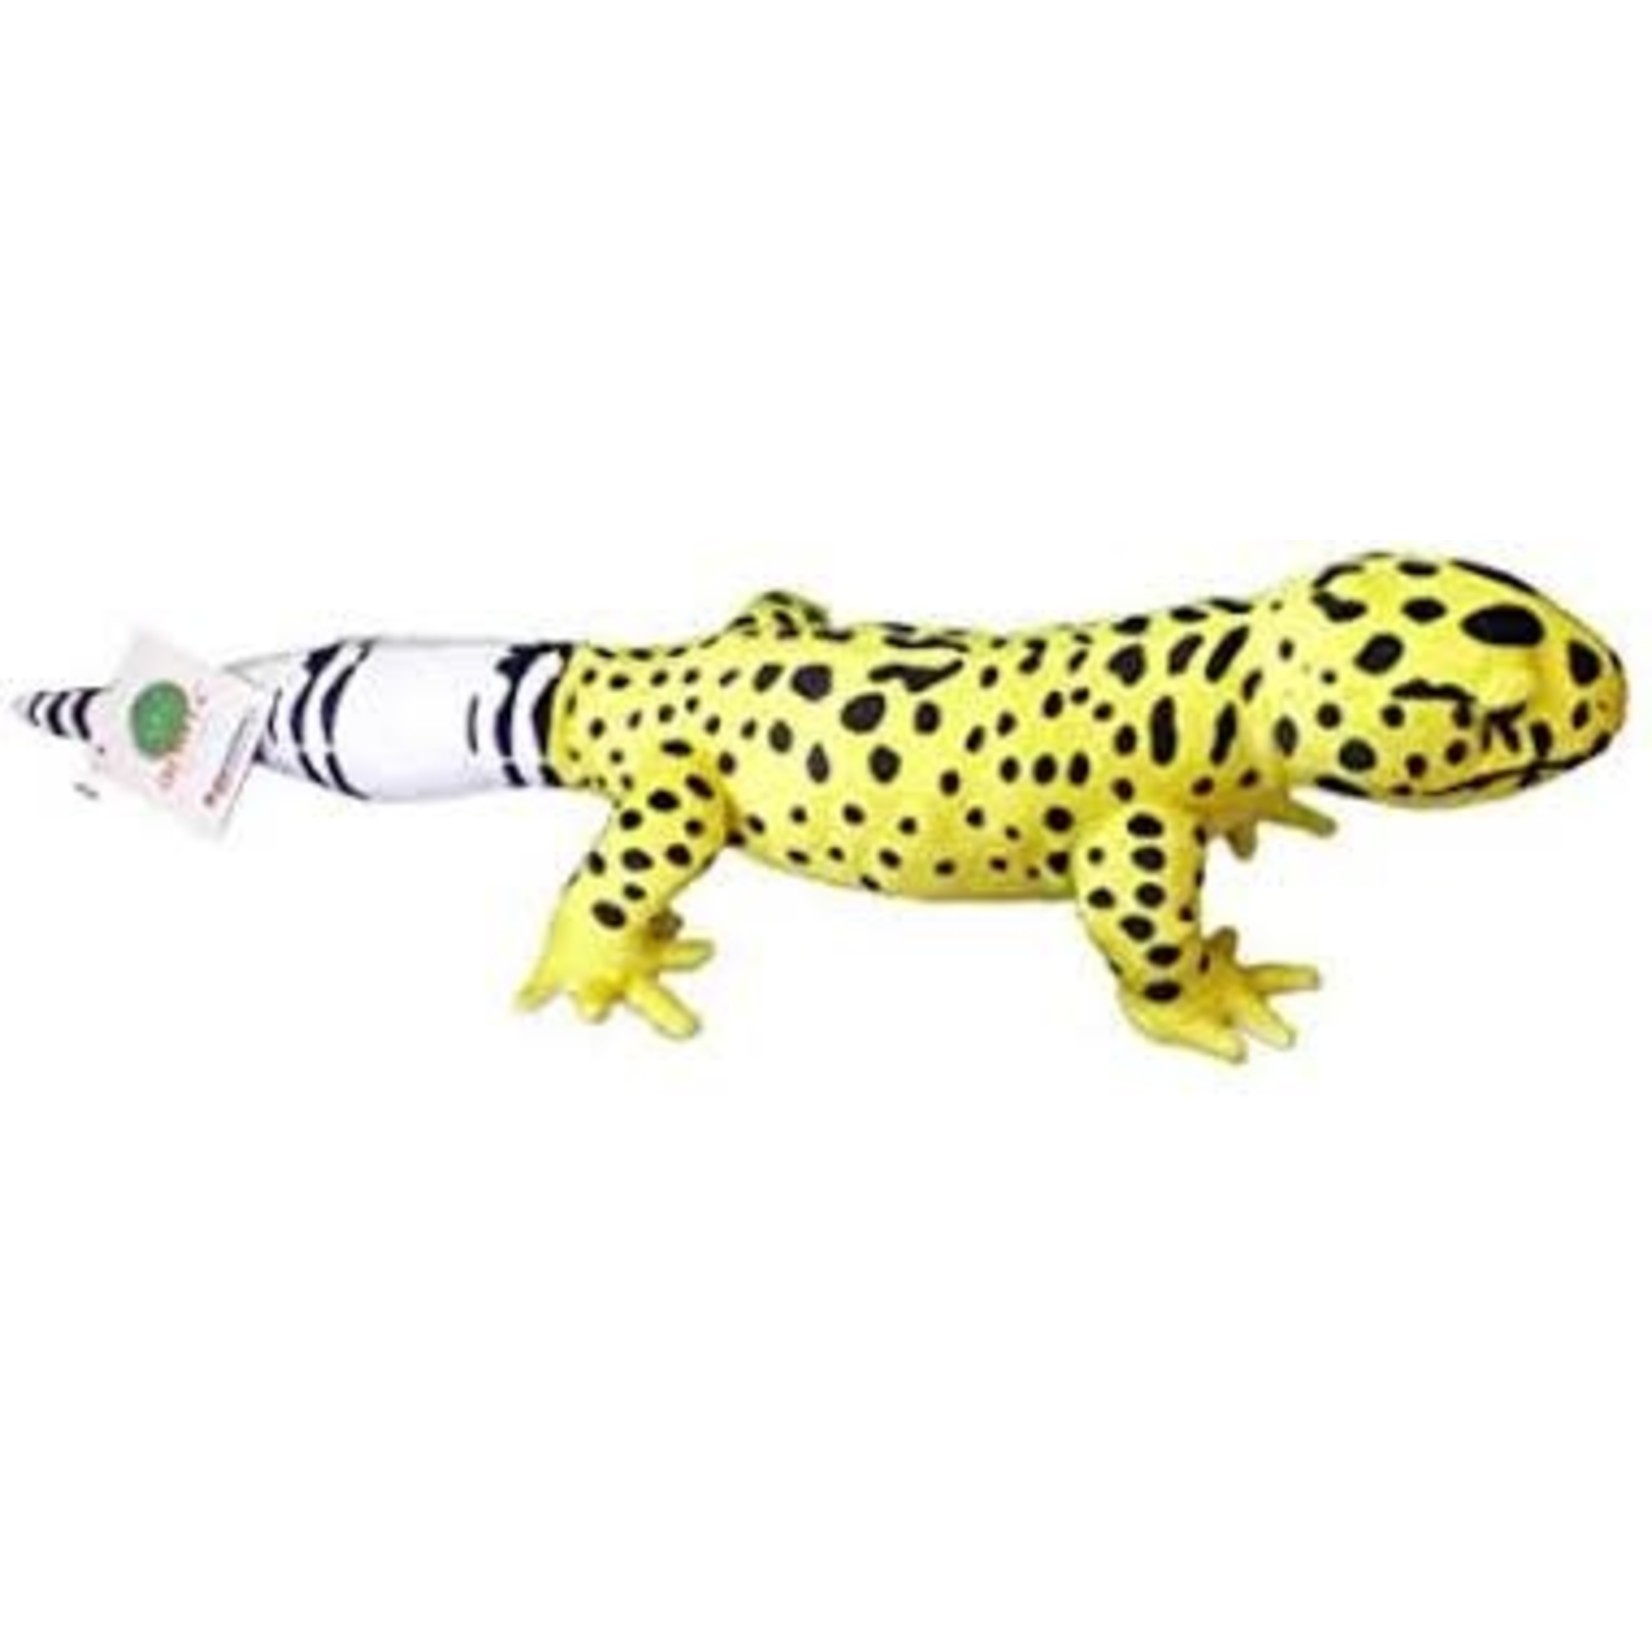 ADORE Leo the Leopard Gecko Stuffed Toy Plushie 22.5"